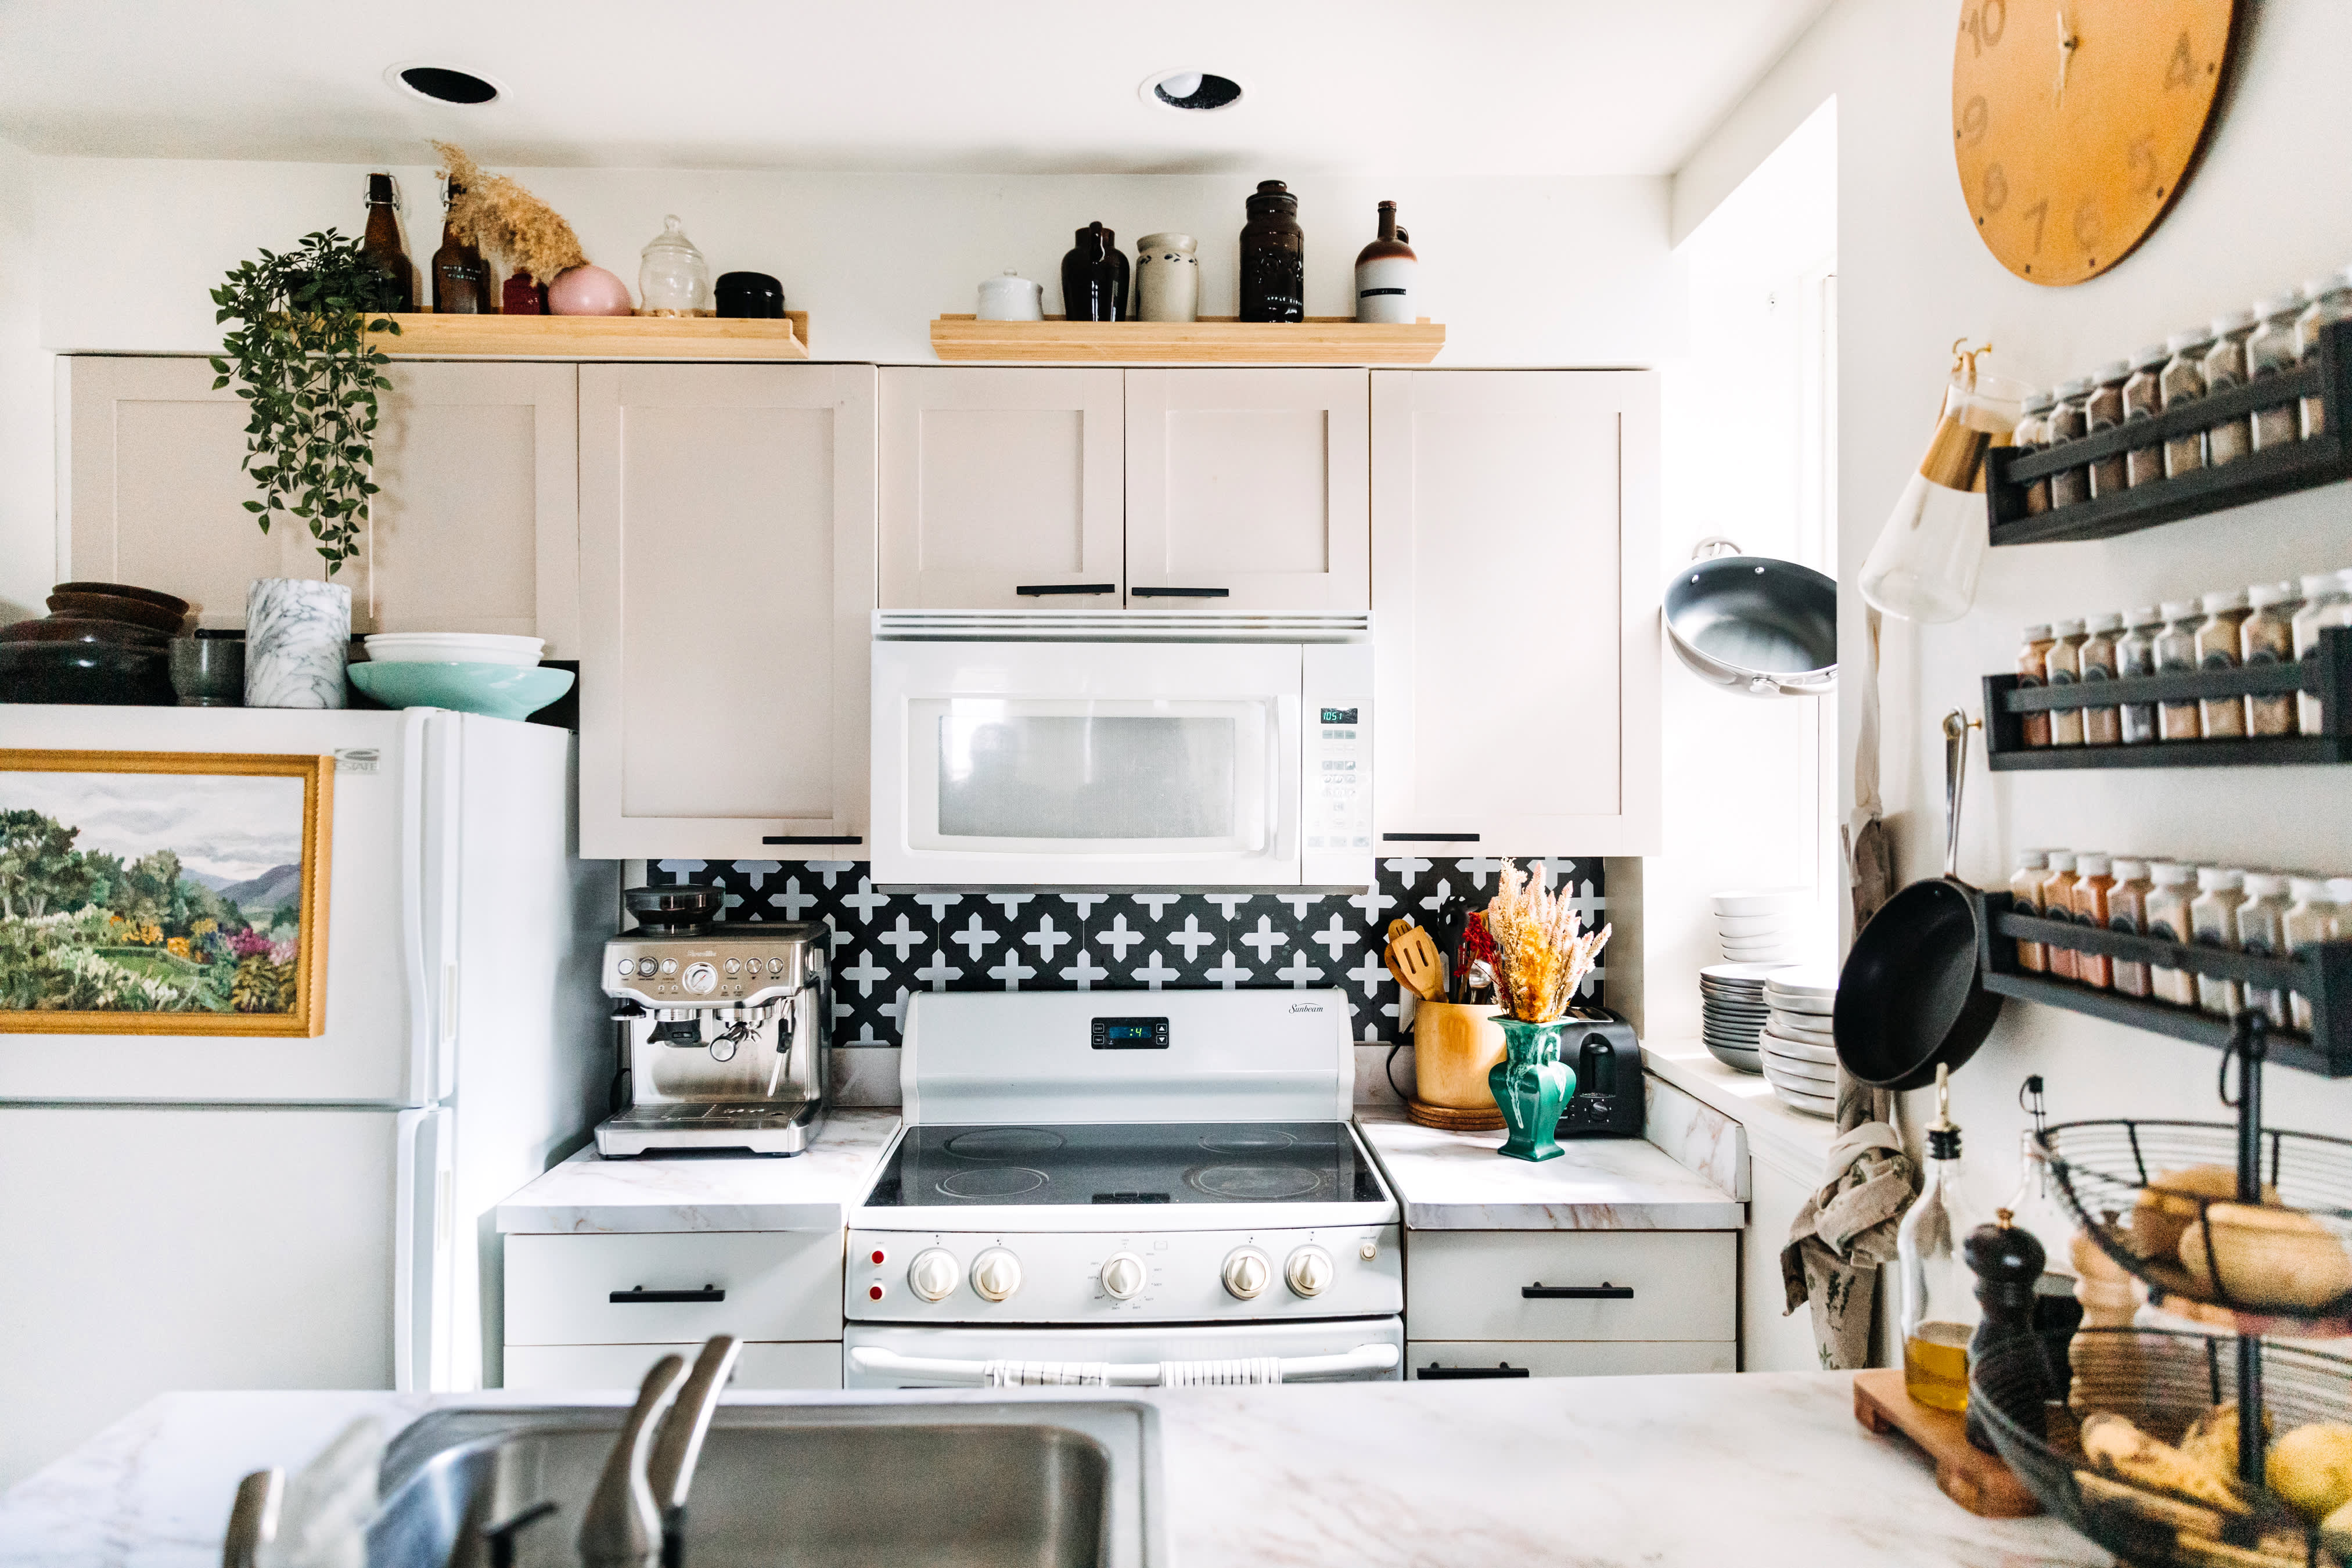 Kitchen Envy: The best Hot Property kitchens